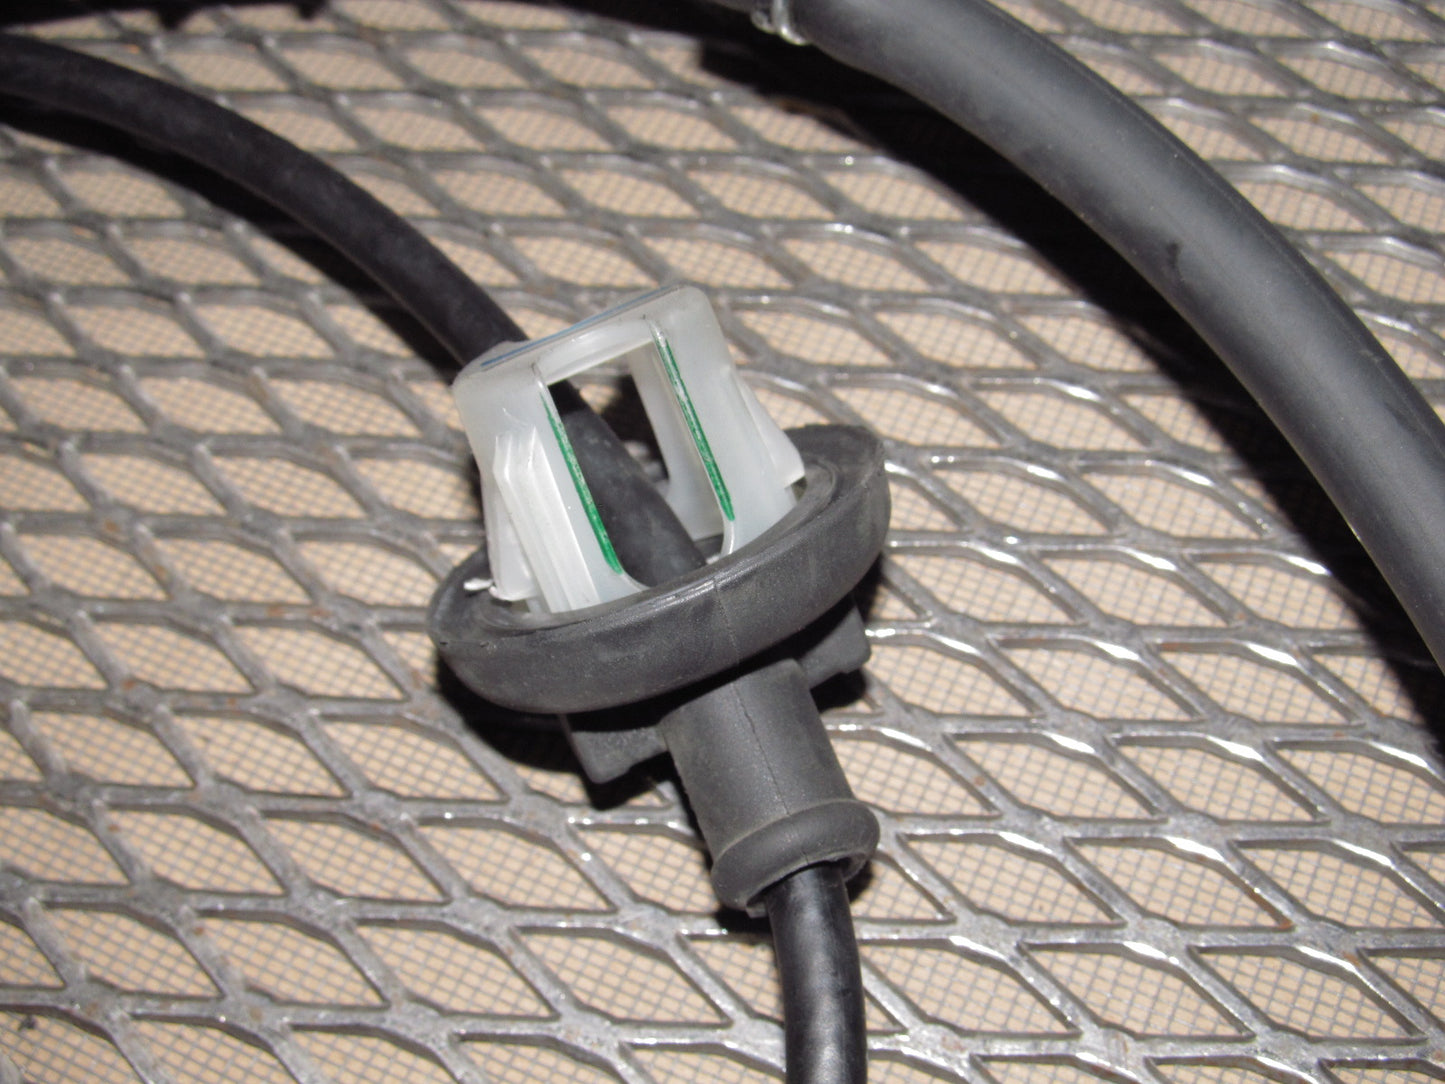 90-93 Mazda Miata OEM VSS Speed Sensor Speedo Cable - A/T